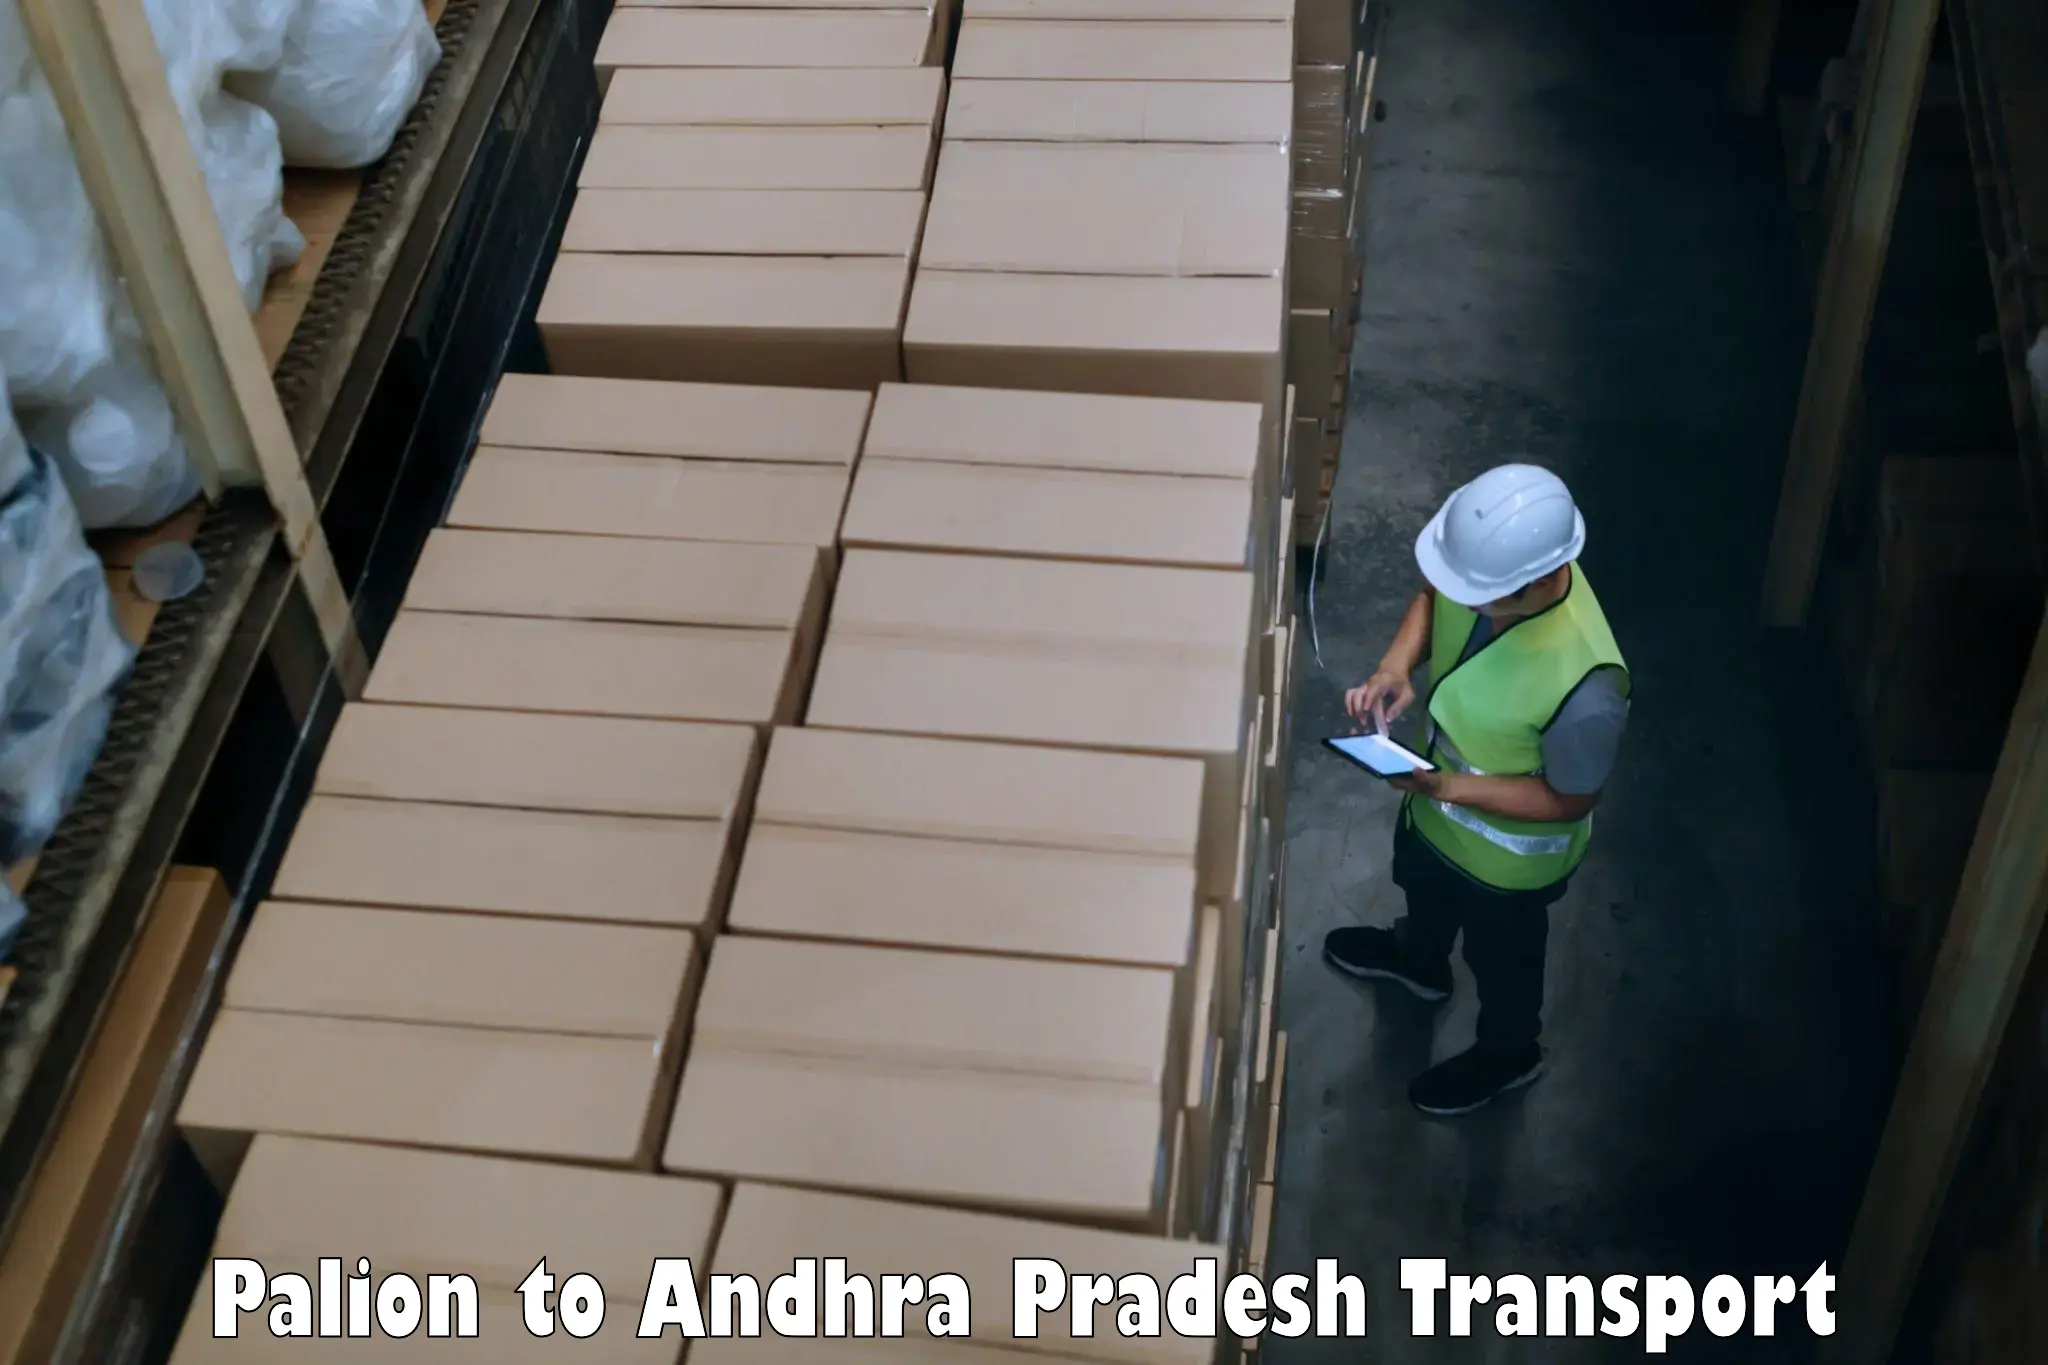 Daily transport service Palion to Andhra Pradesh